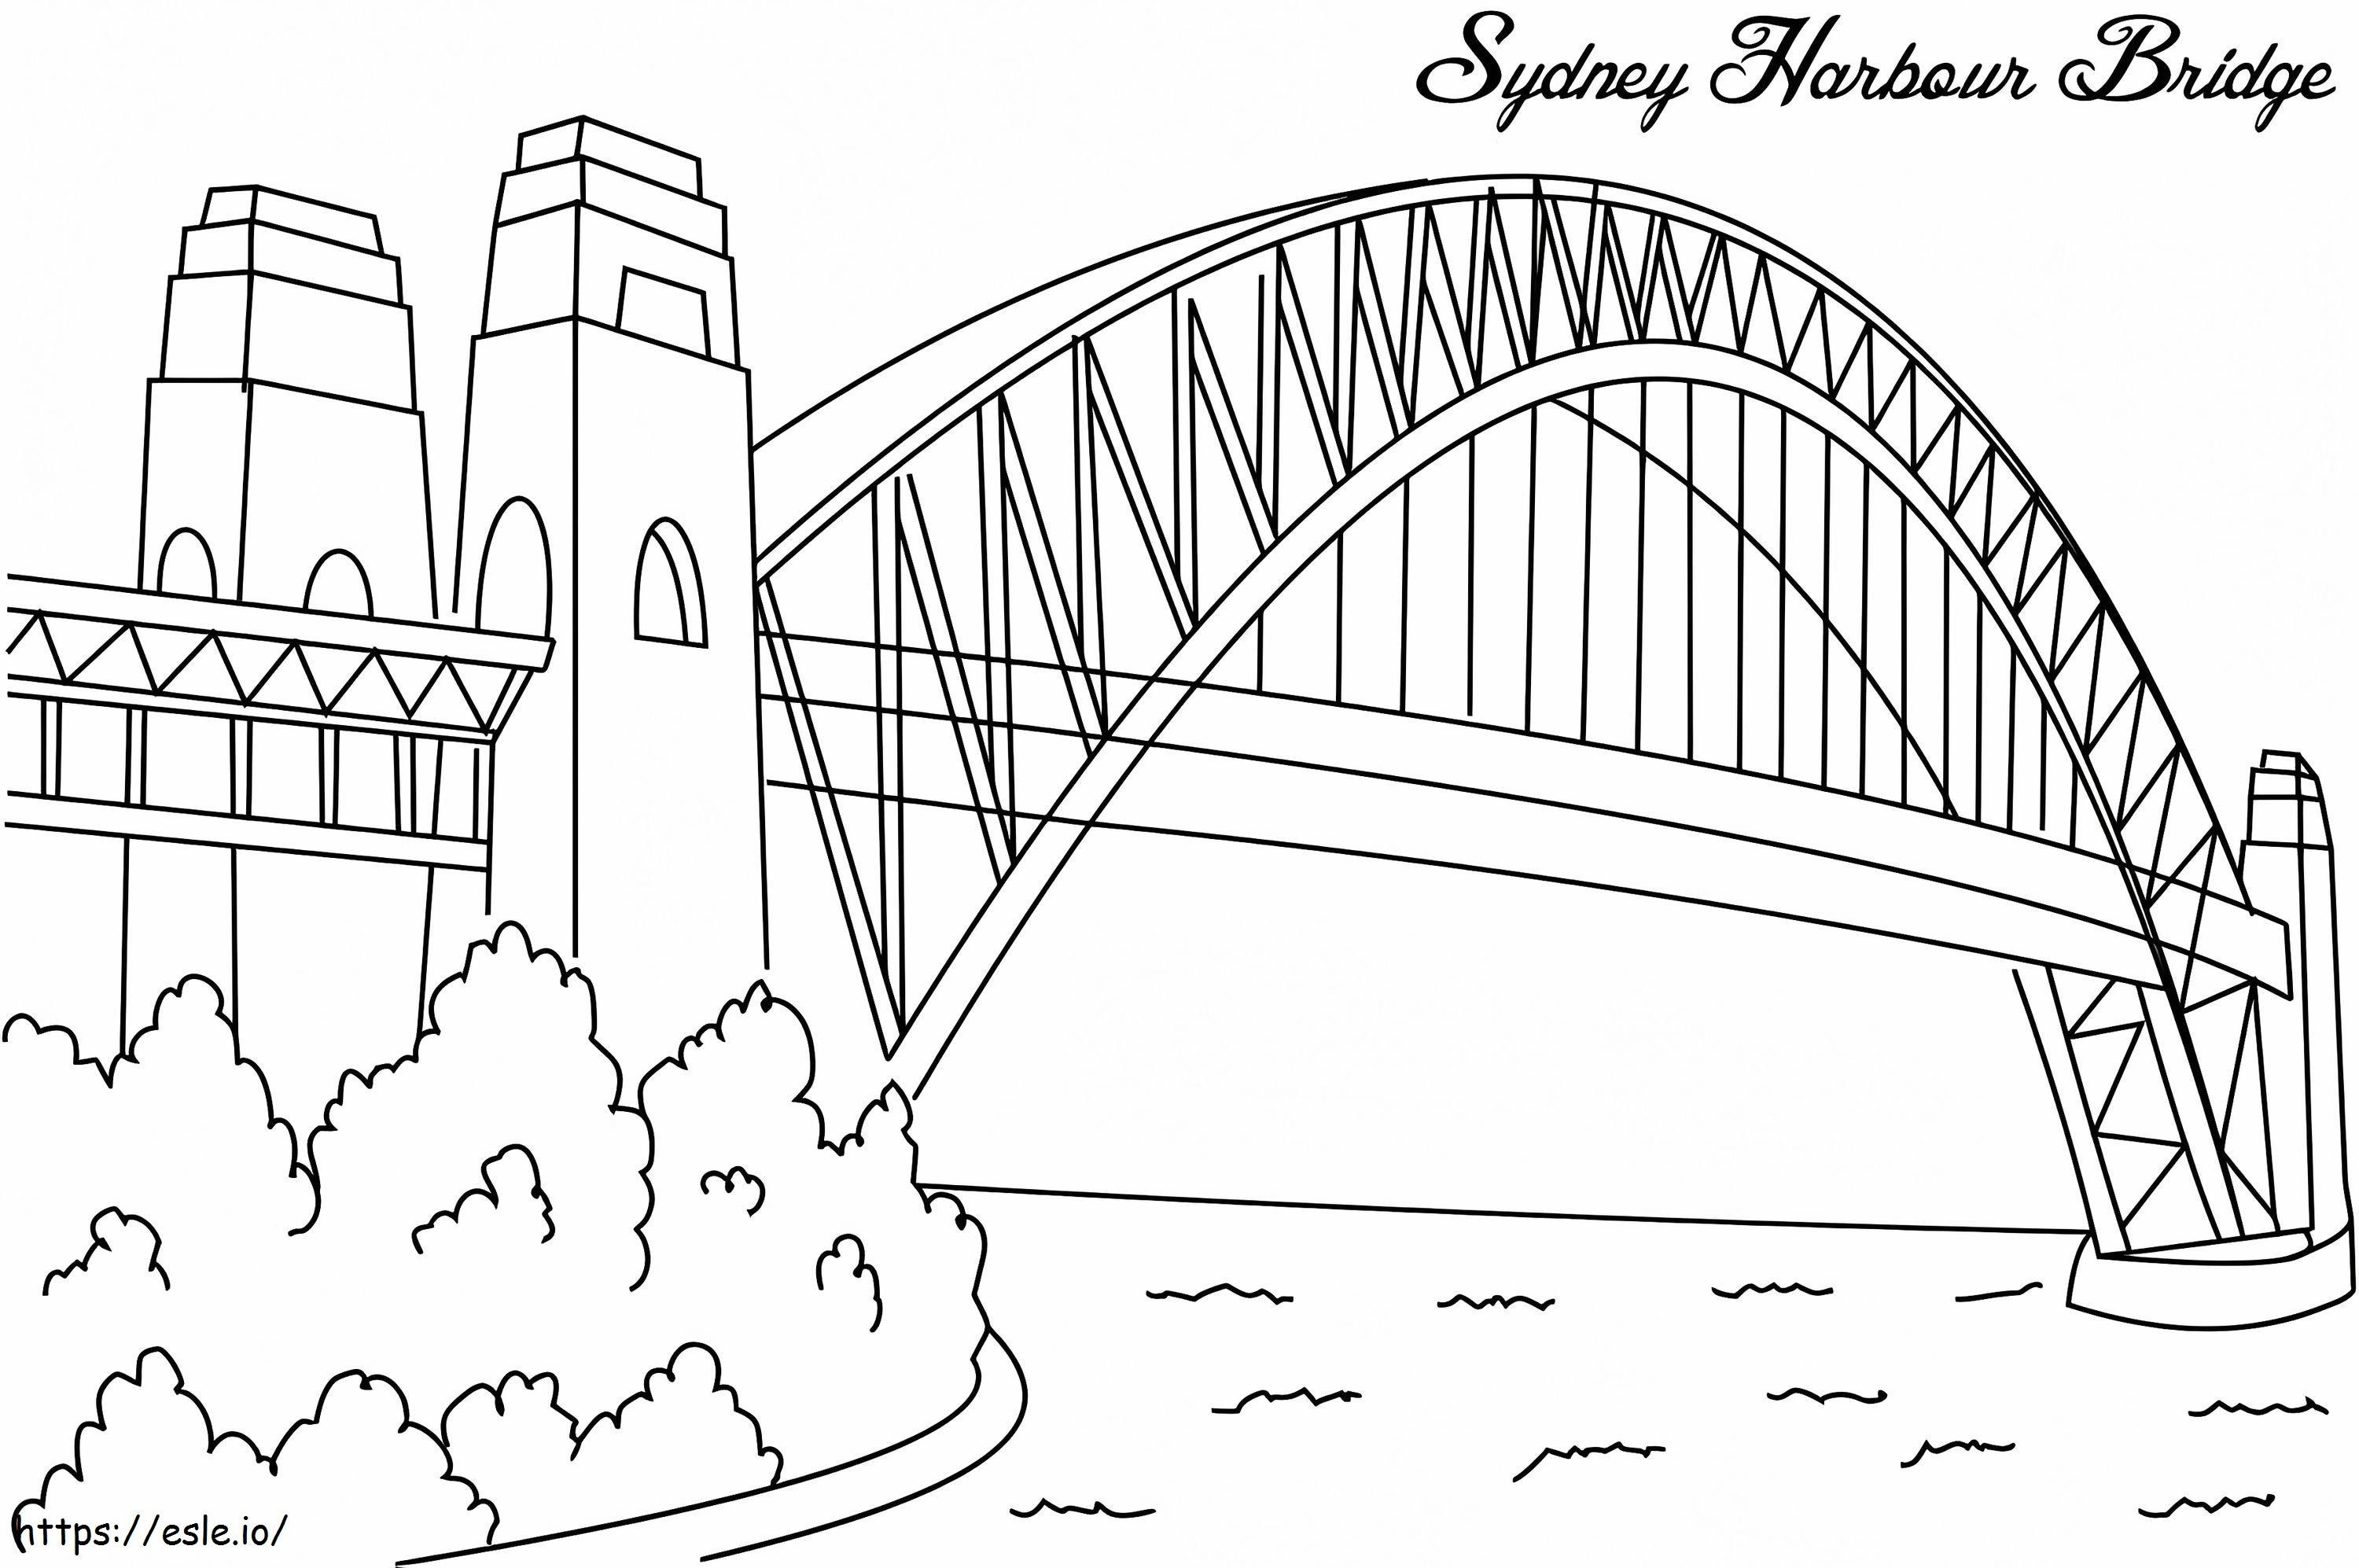  Sydney Harbour Bridge A4 da colorare